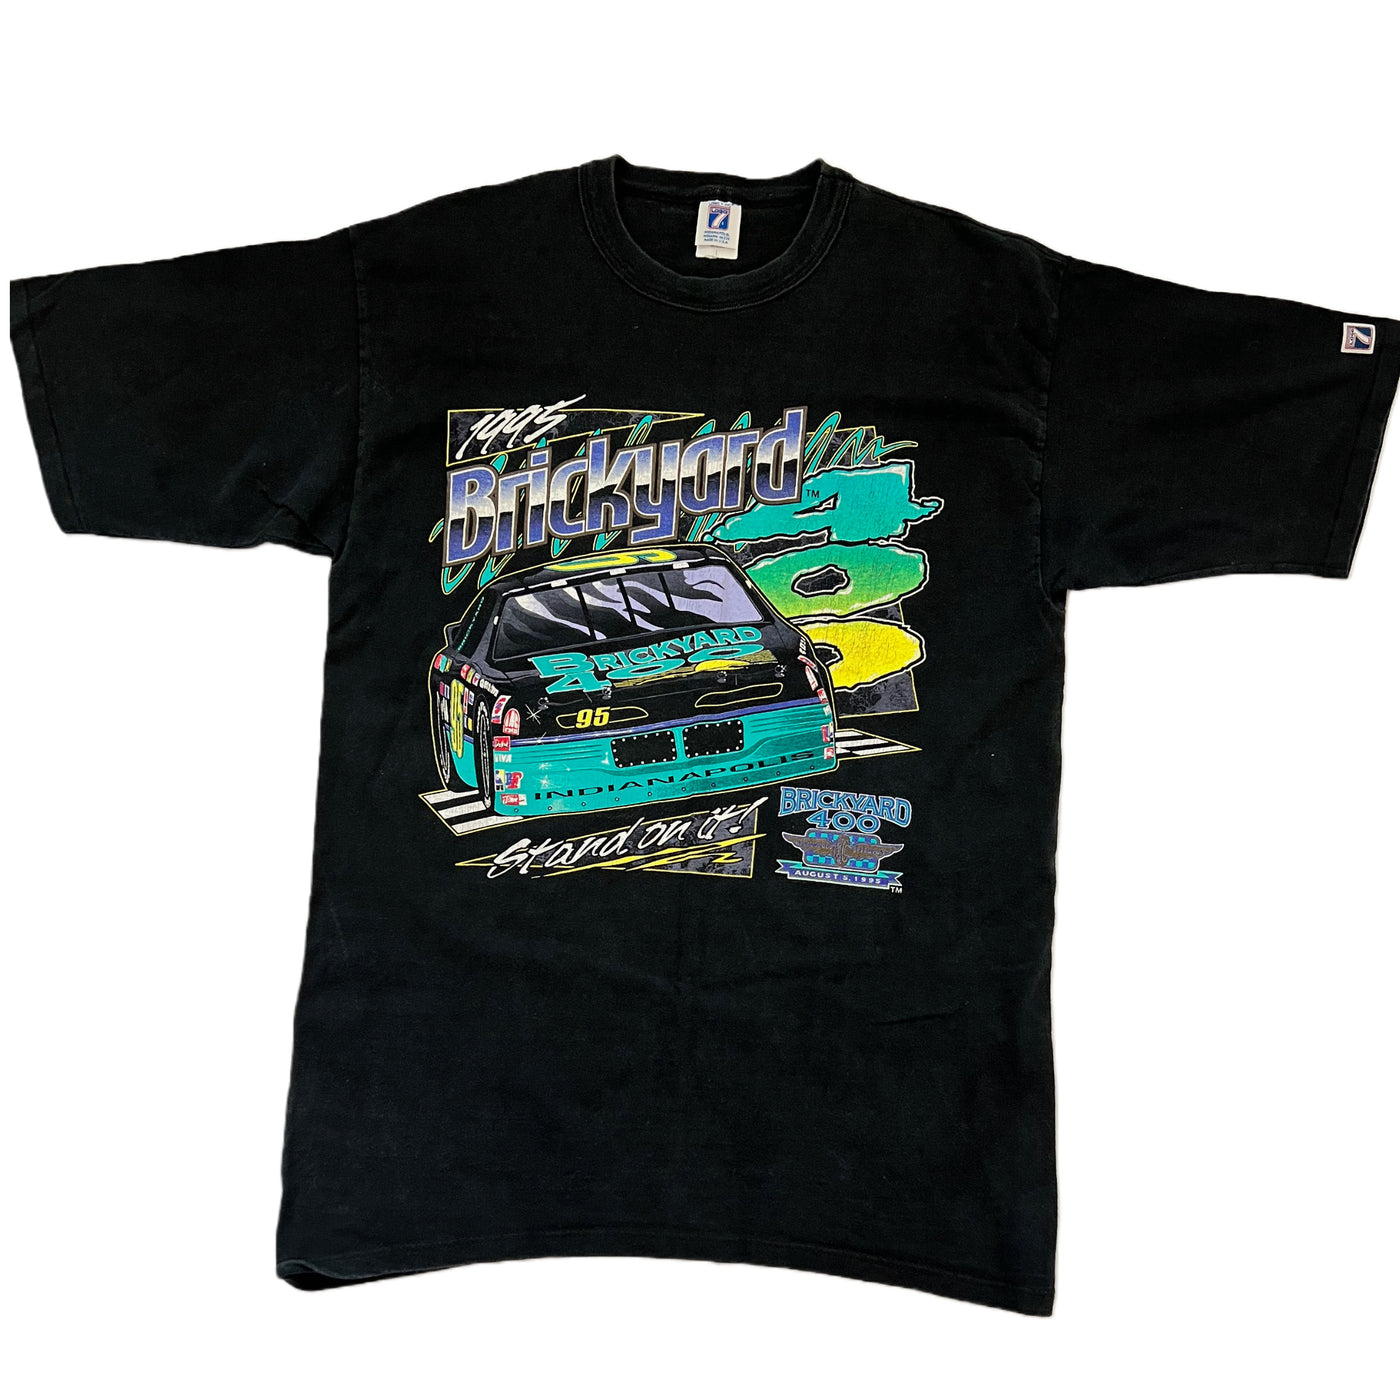 Vintage 1995 Brickyard 400 vintage T-shirt.